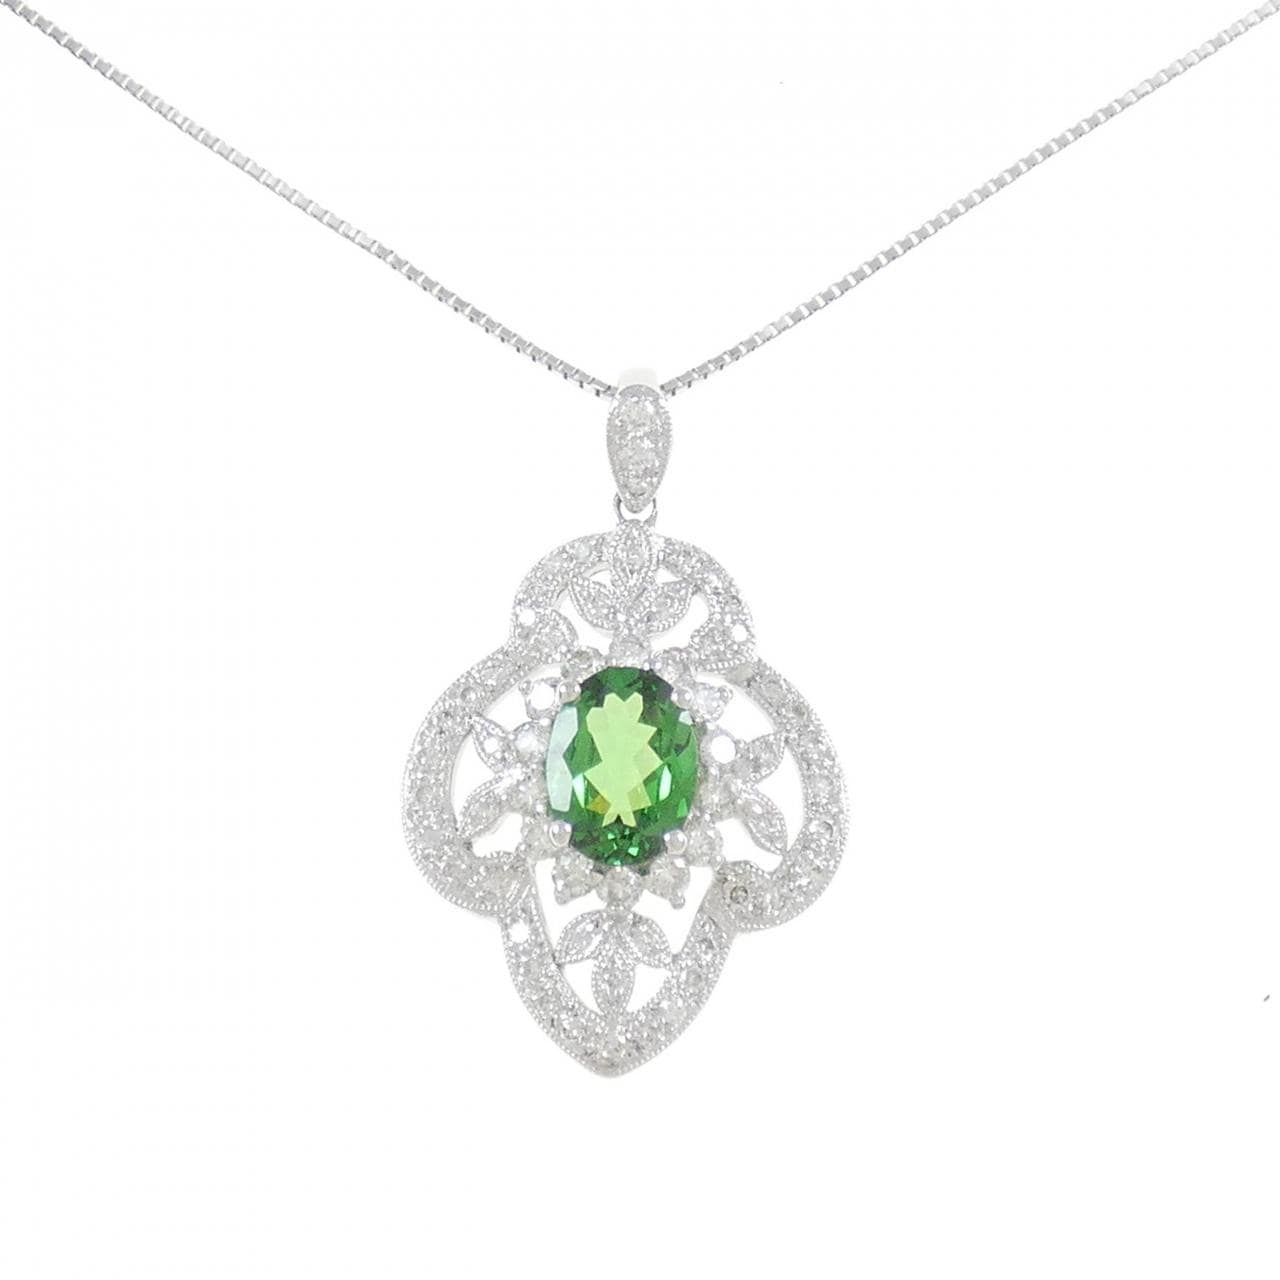 K18WG green Garnet necklace 1.34CT